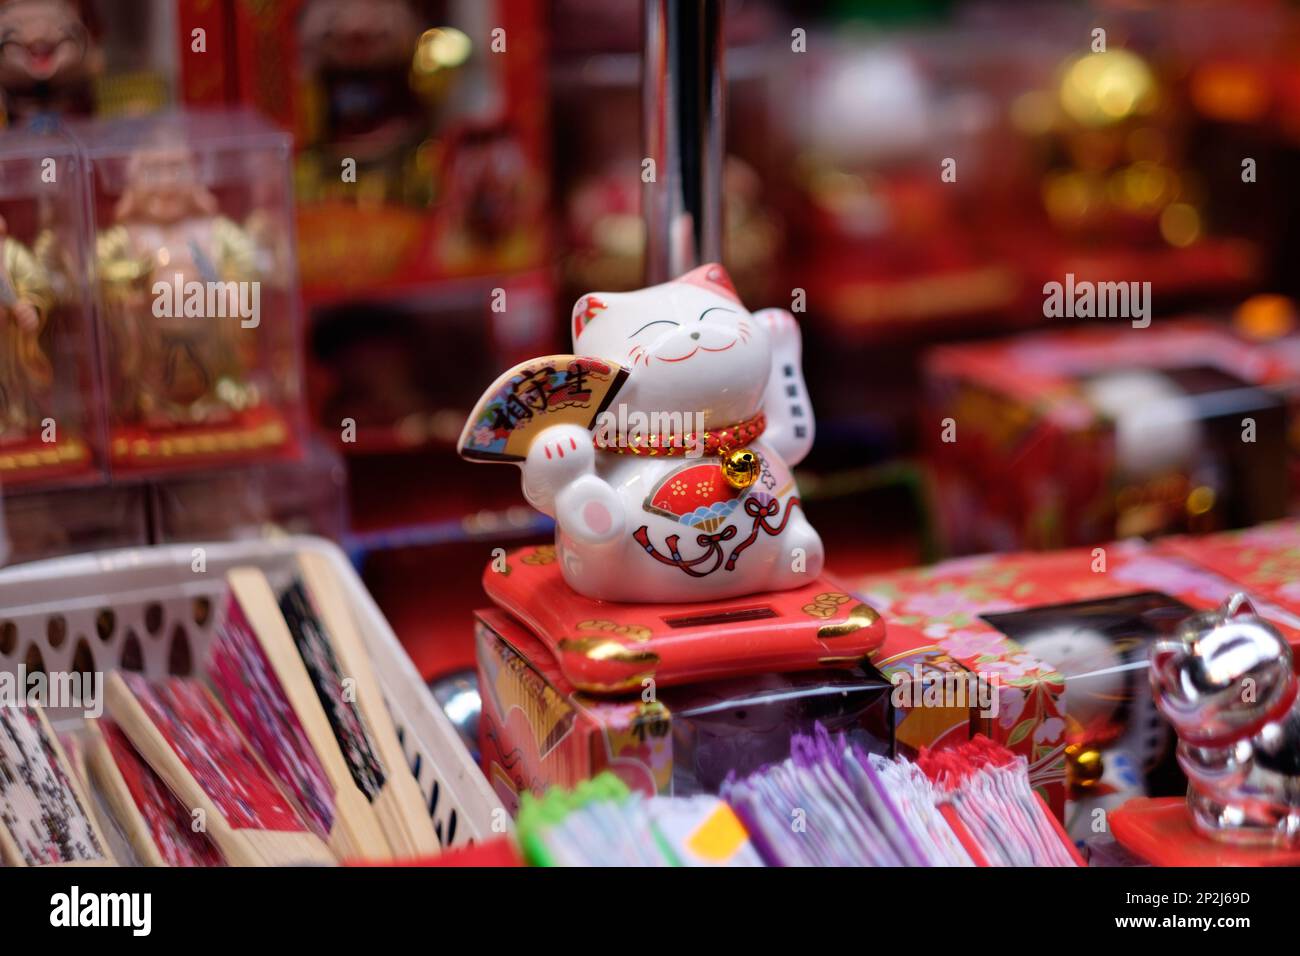 Lucky cat in Chinatown showcase, London Stock Photo